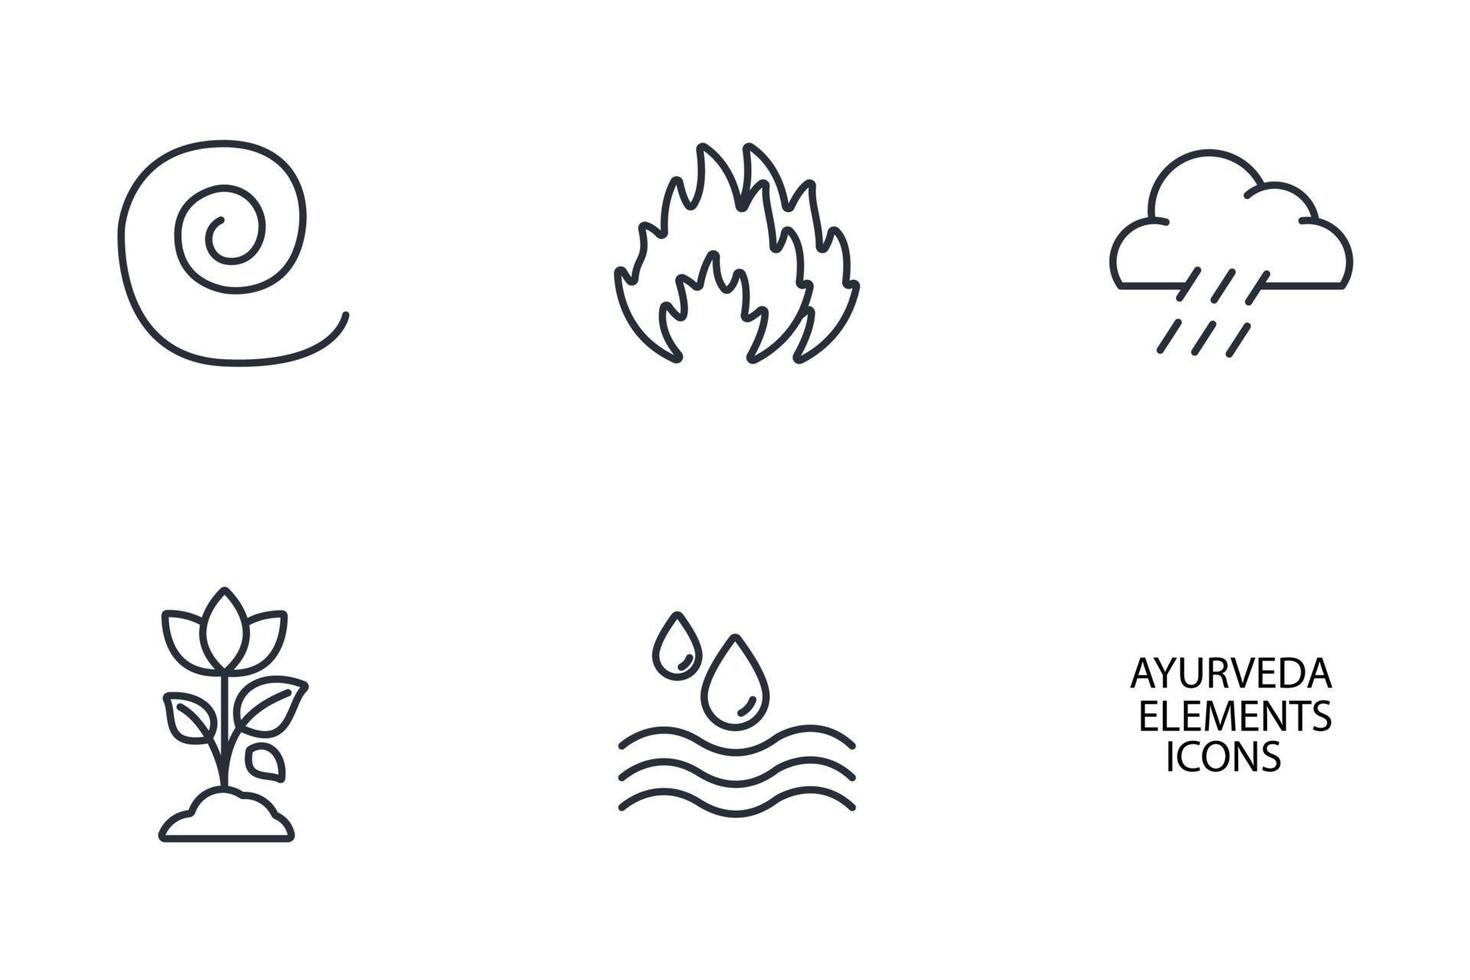 de fem elementen i ayurveda ikoner set. de fem elementen i ayurveda pack symbol vektorelement för infografisk webb vektor